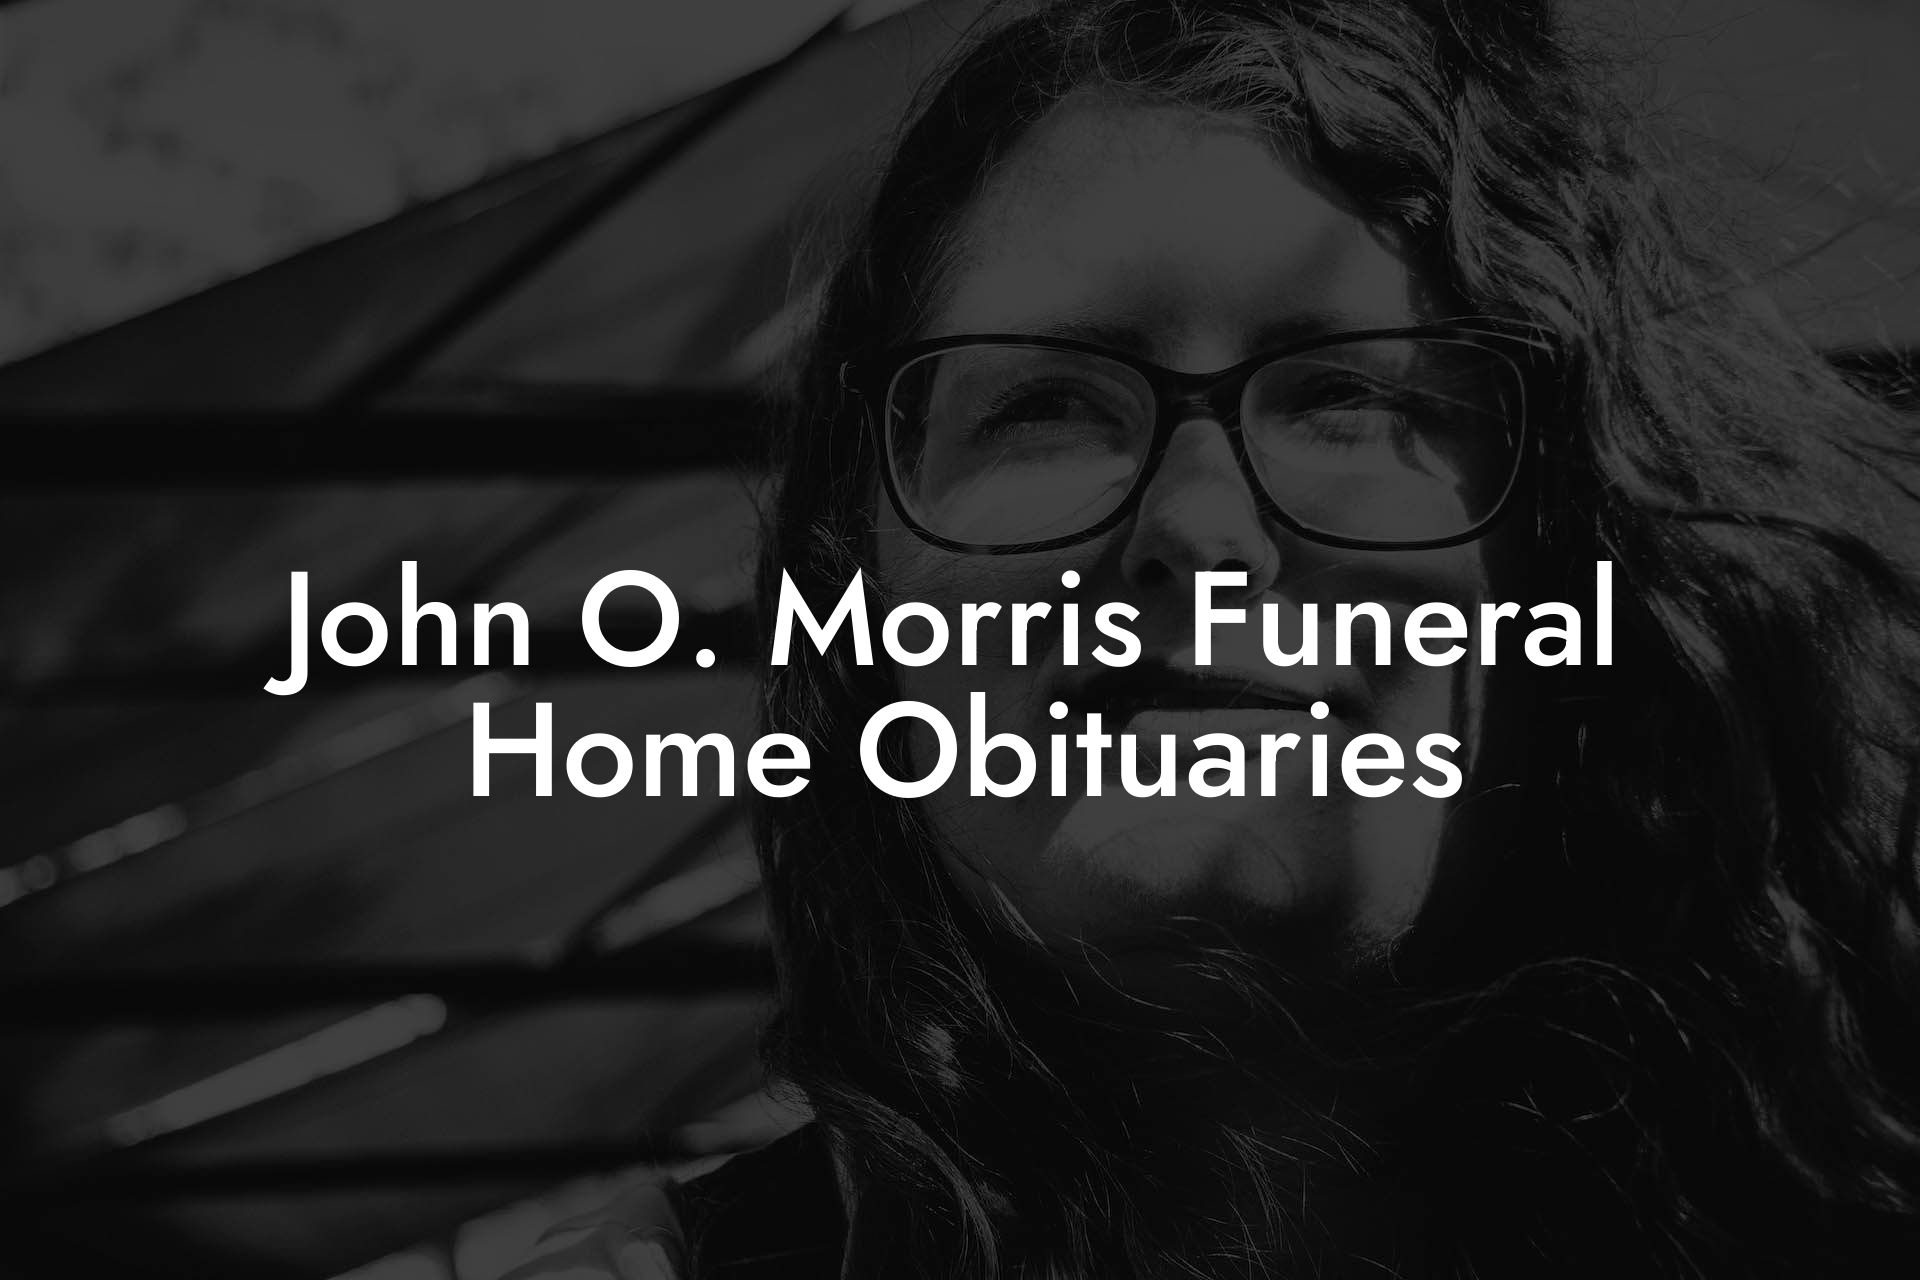 John O. Morris Funeral Home Obituaries